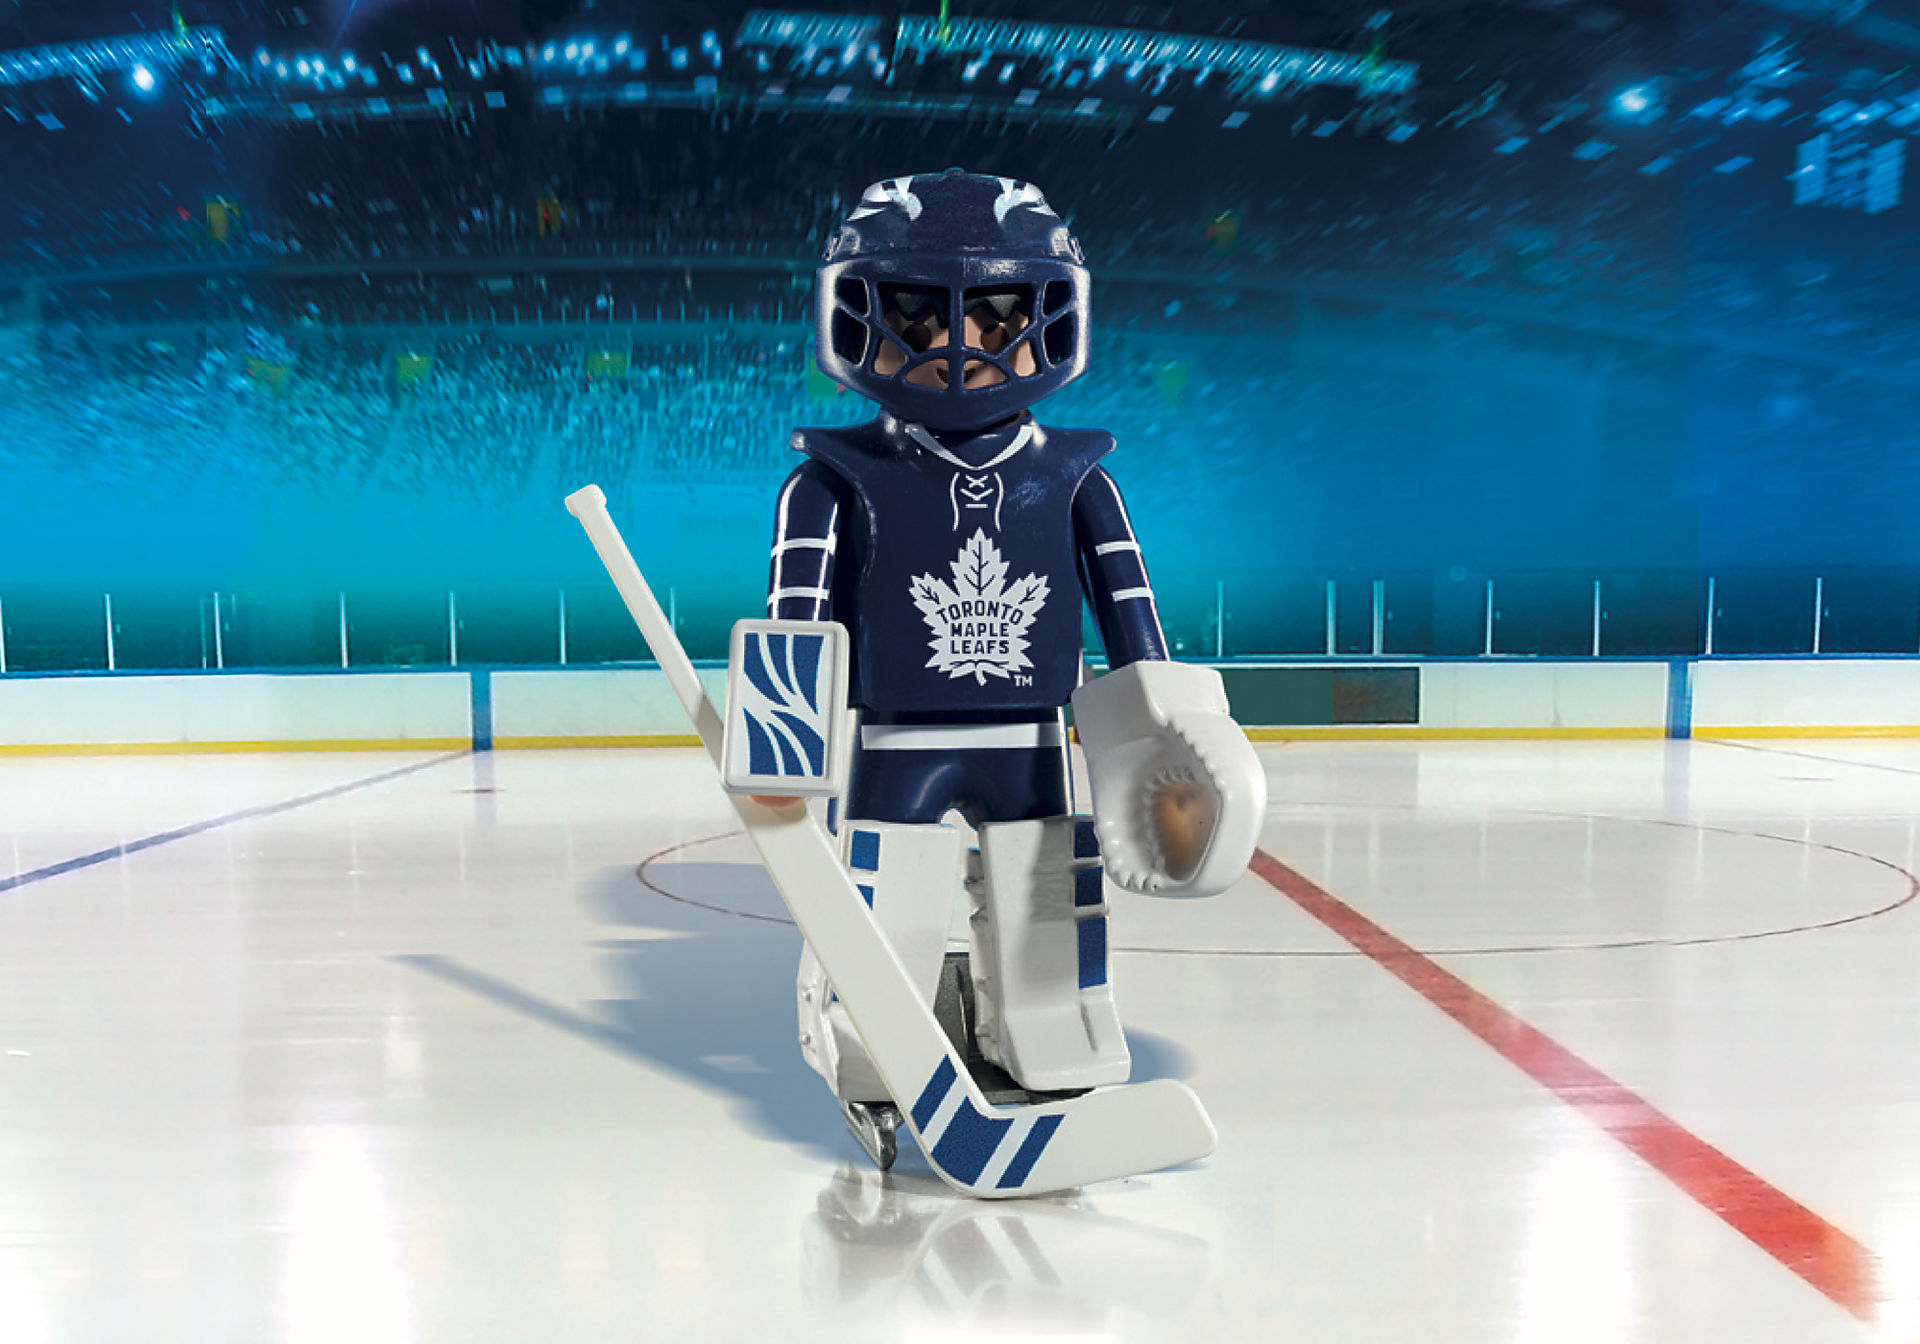 5083 NHL™ Toronto Maple Leafs™ gardien de but zoom image1